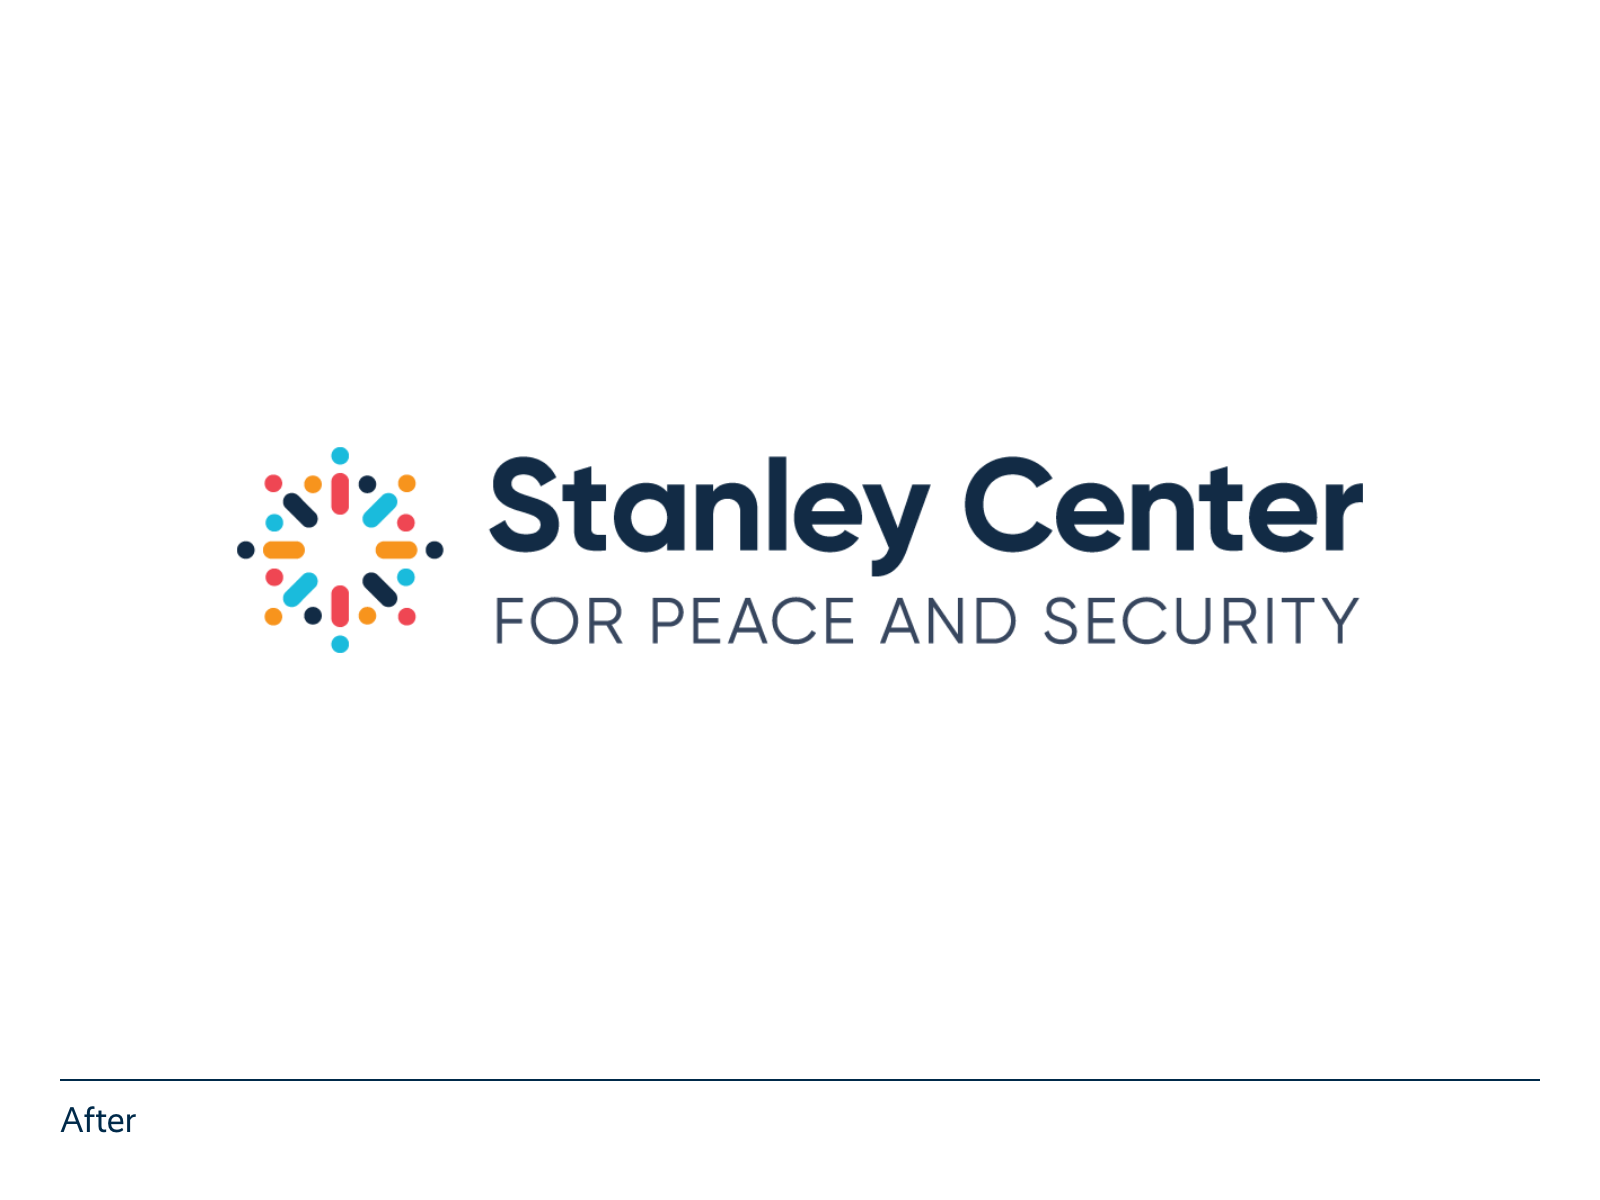 Stanley Center After Logo